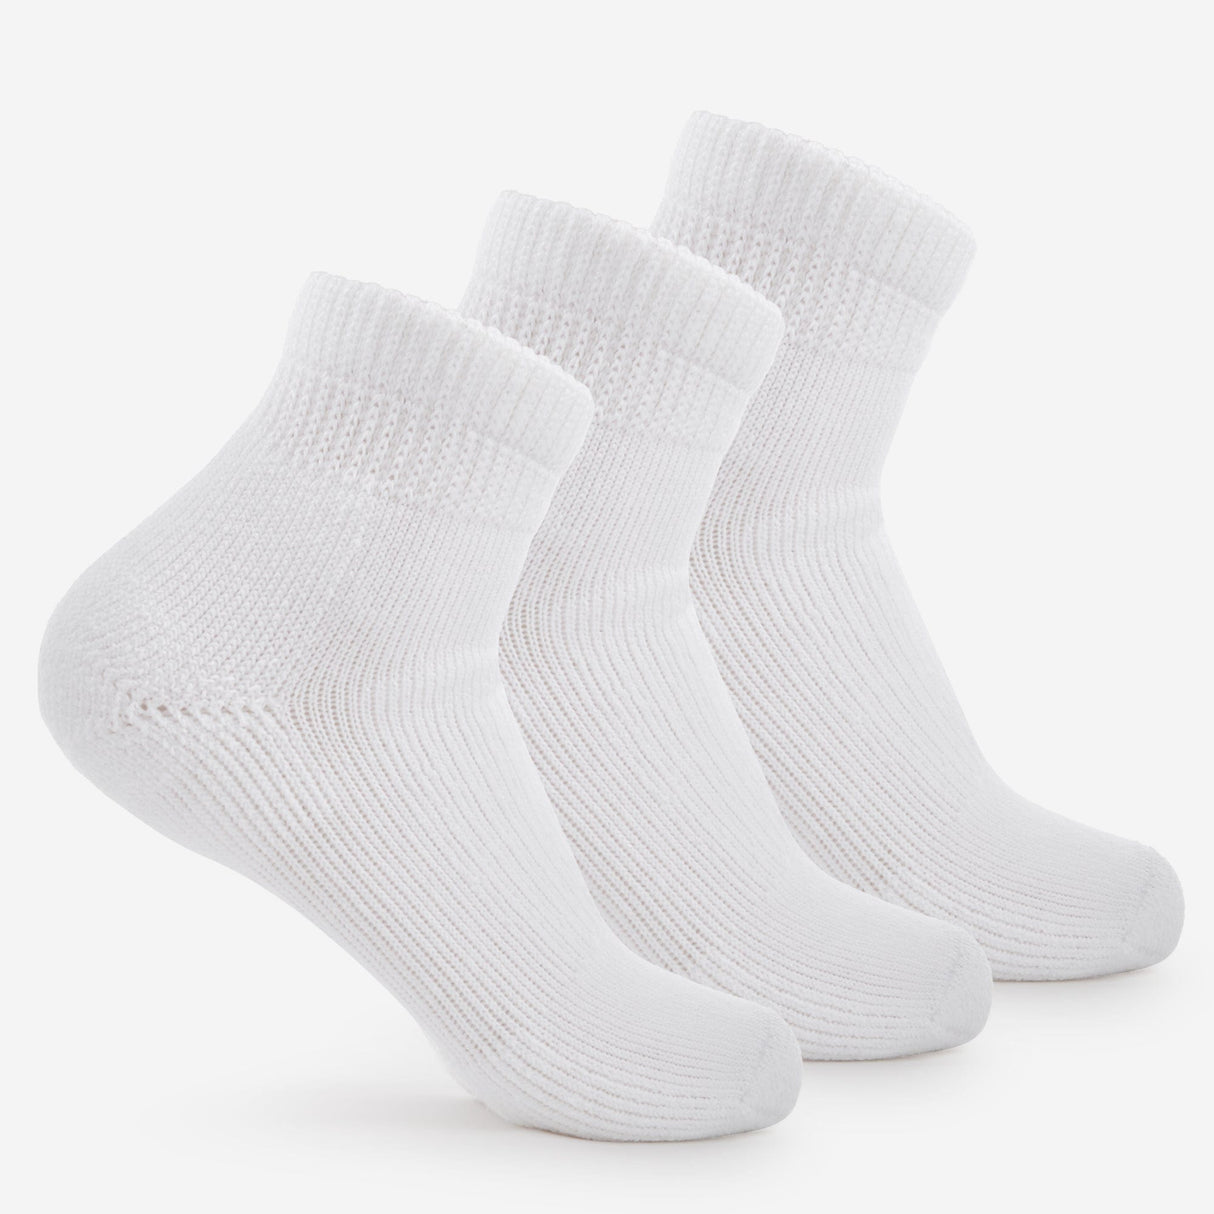 Thorlo Walking Moderate Cushion Mini-Crew Socks  -  Large / White / 3-Pair Pack